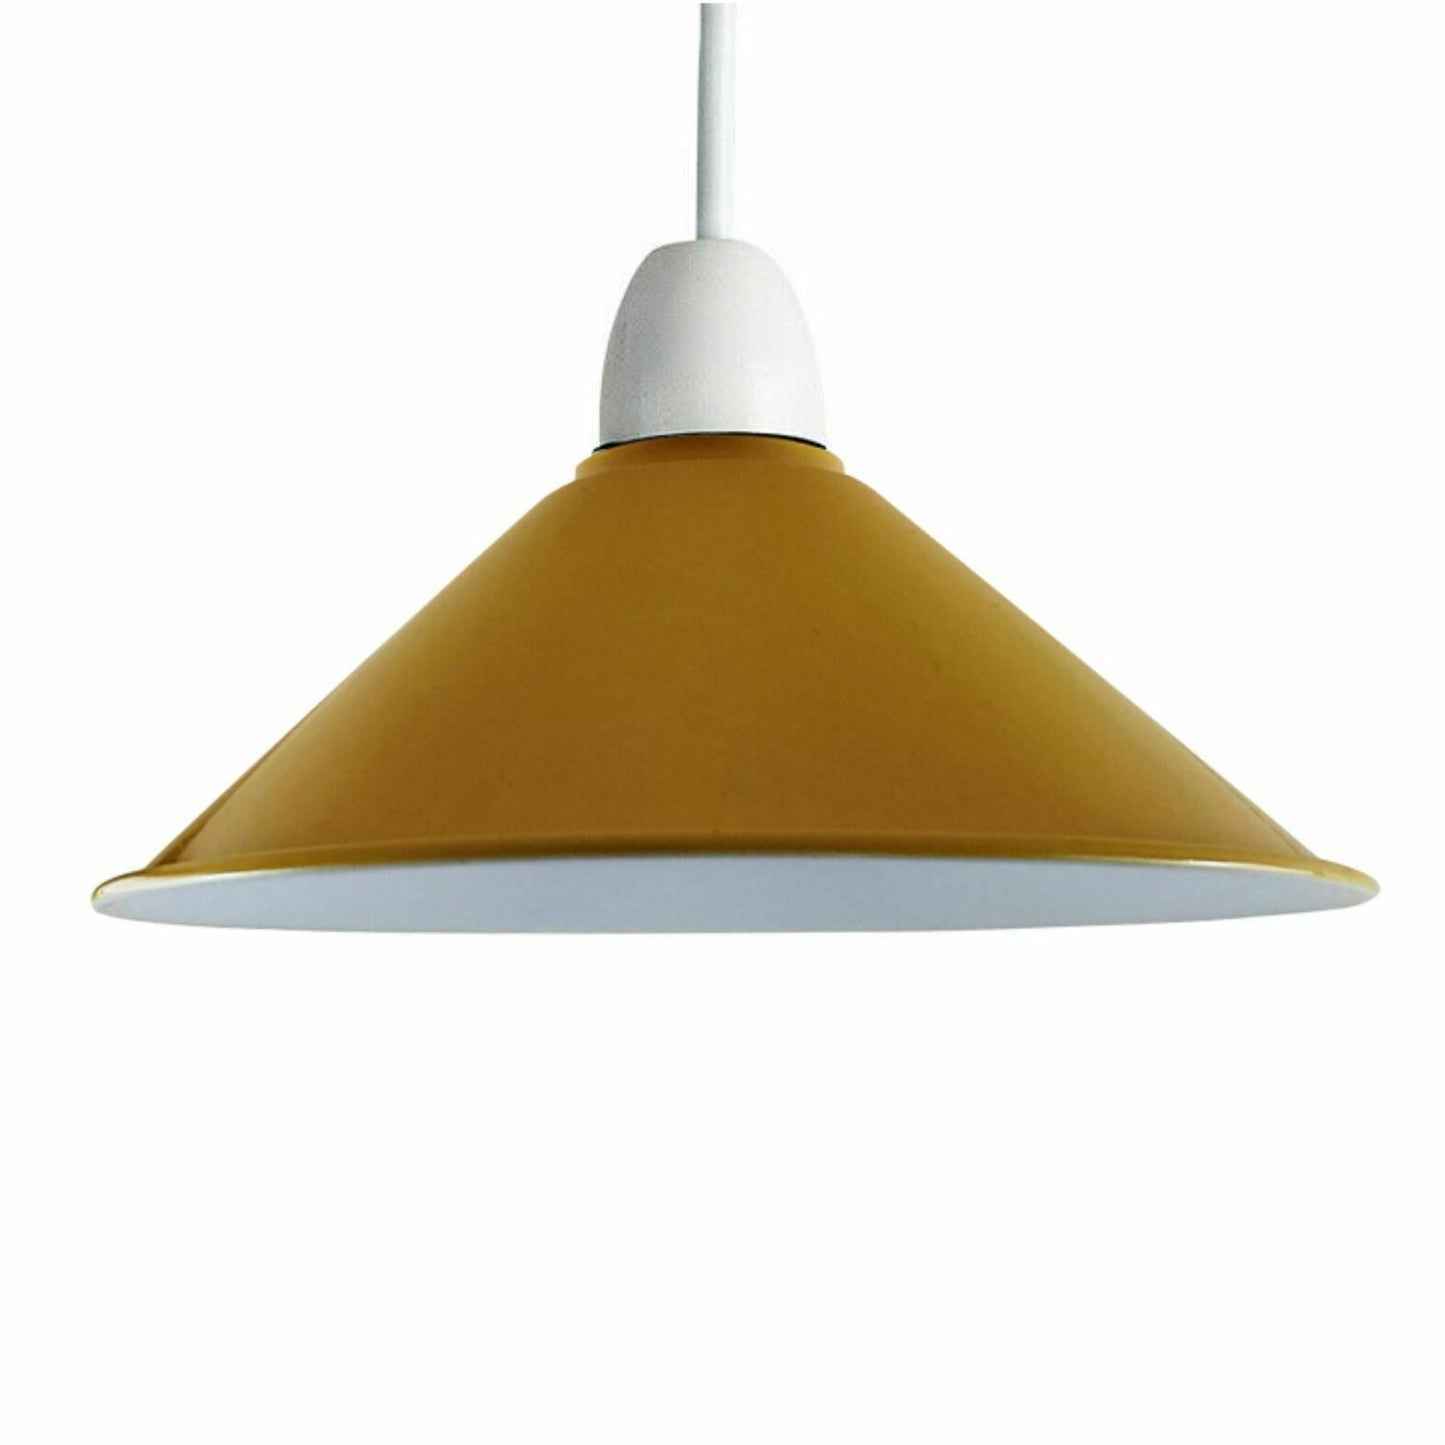 Lamp shade - Yellow